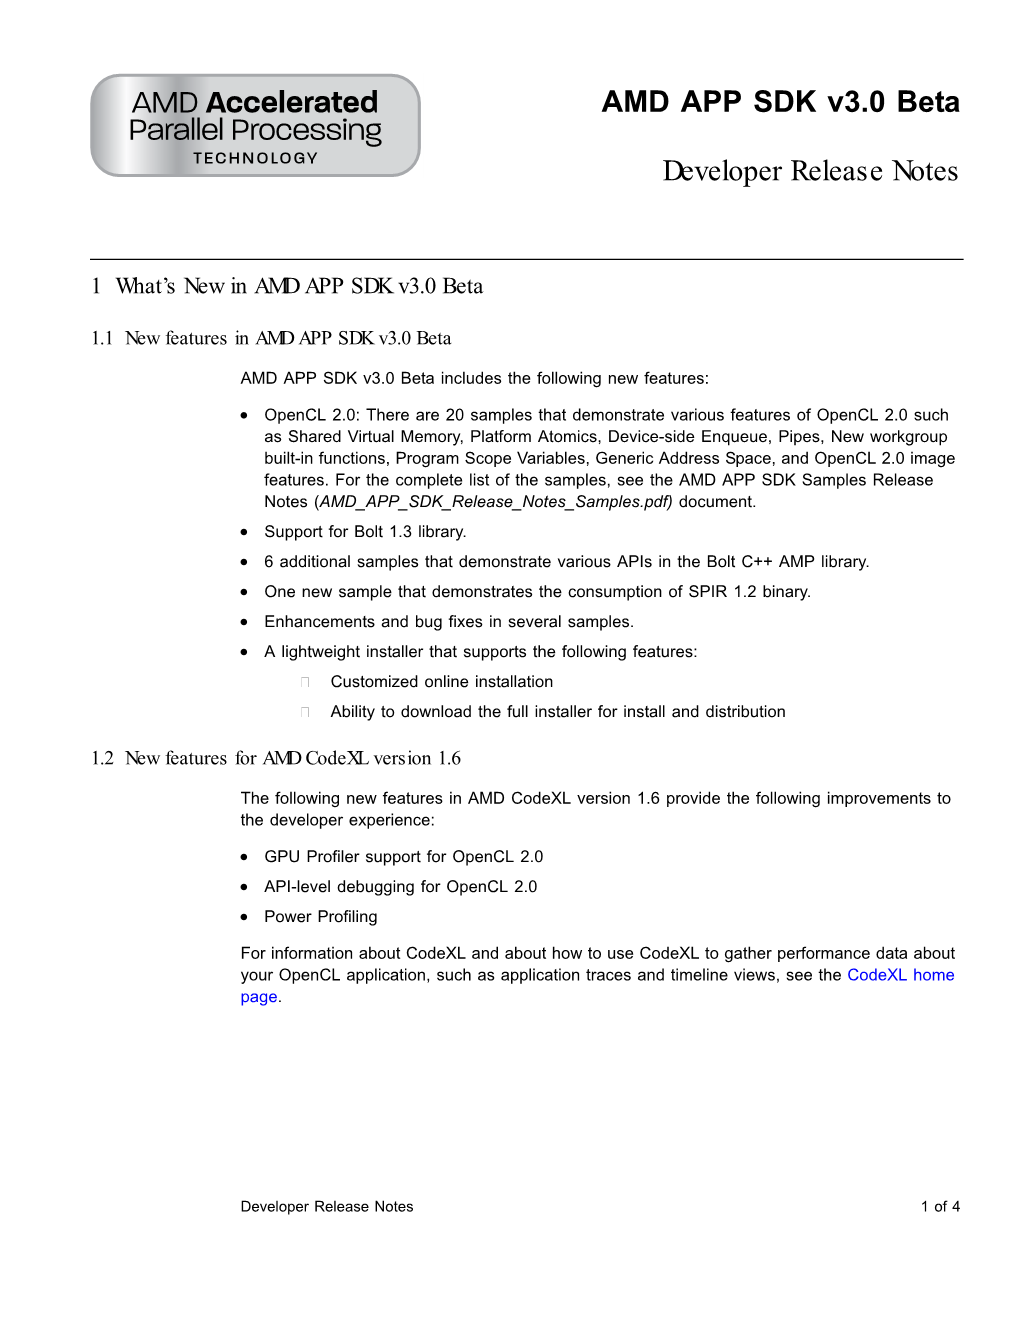 AMD APP SDK Developer Release Notes